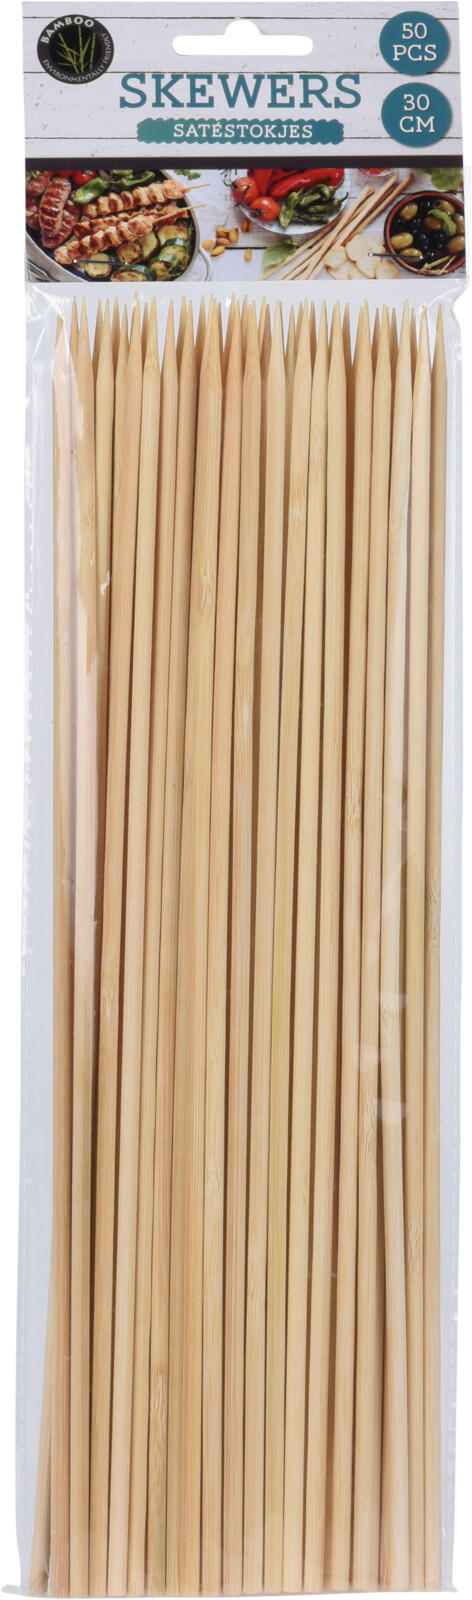 špejle bambus 30cmx4mm (50ks) 0.14 Kg MAXMIX Sklad14 386246 182